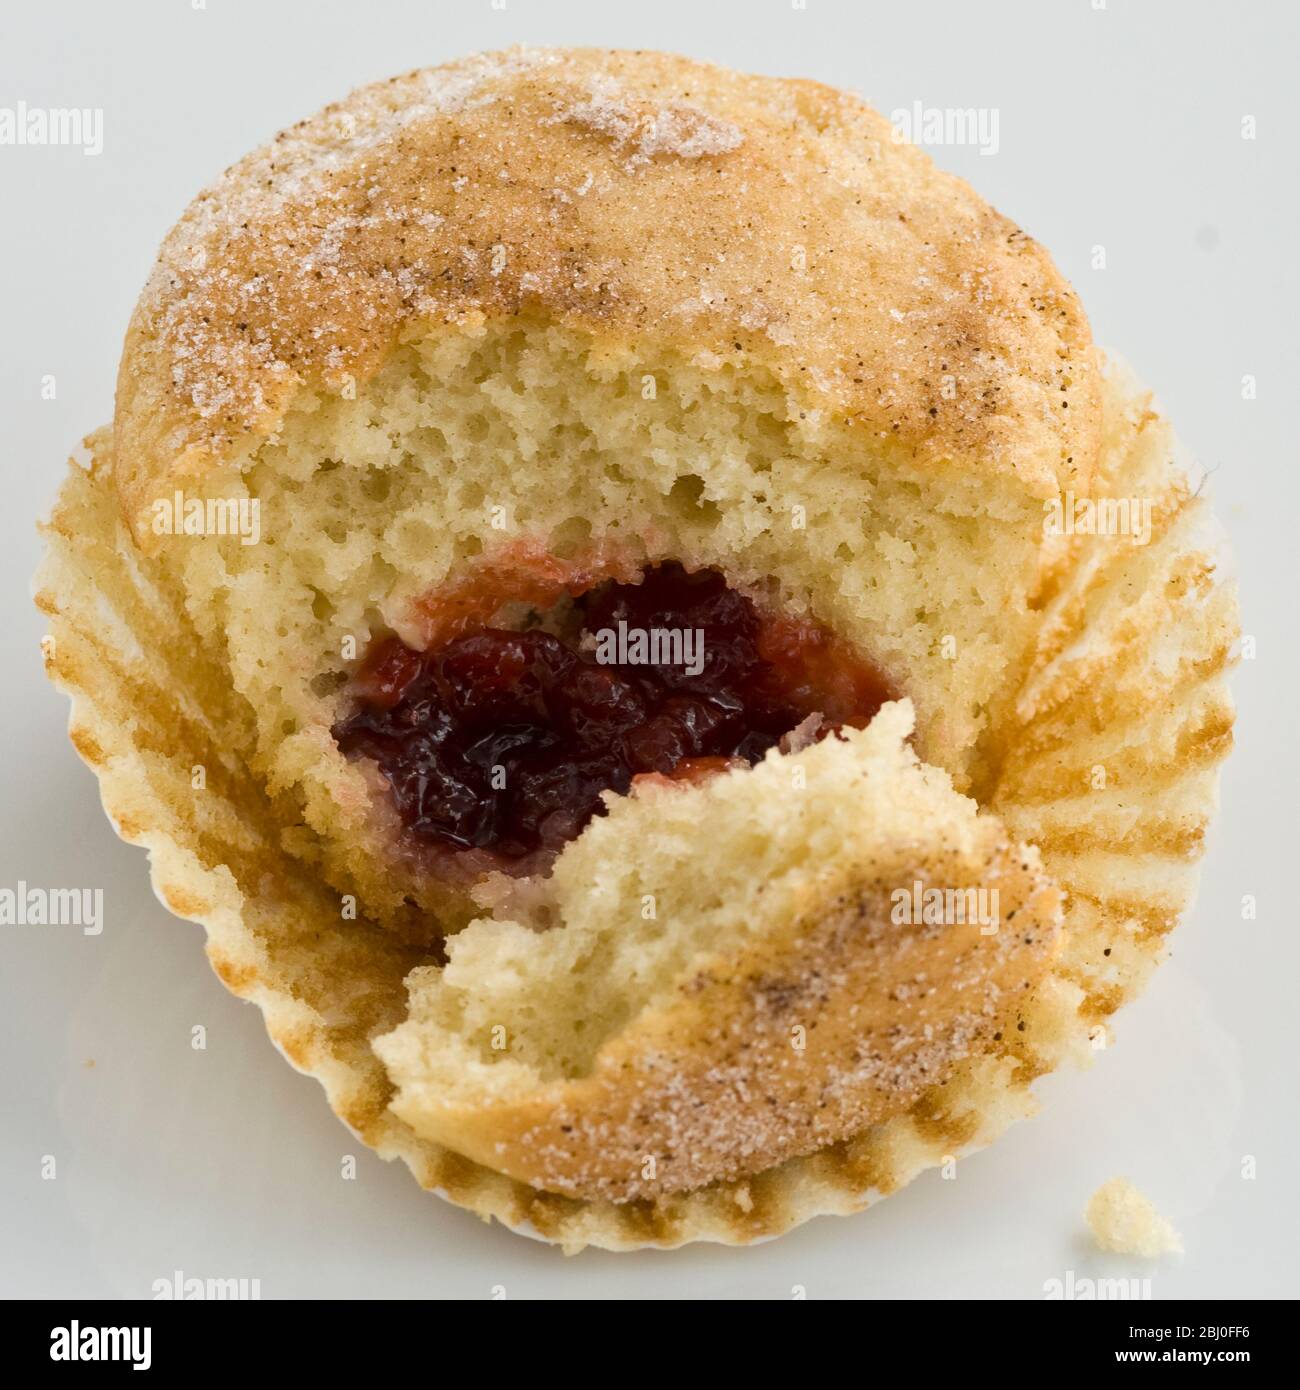 Muffin con parte superior azucarada llena de mermelada (jalea), rota para mostrar el relleno. Un muffin masquerading como una donut! - Foto de stock